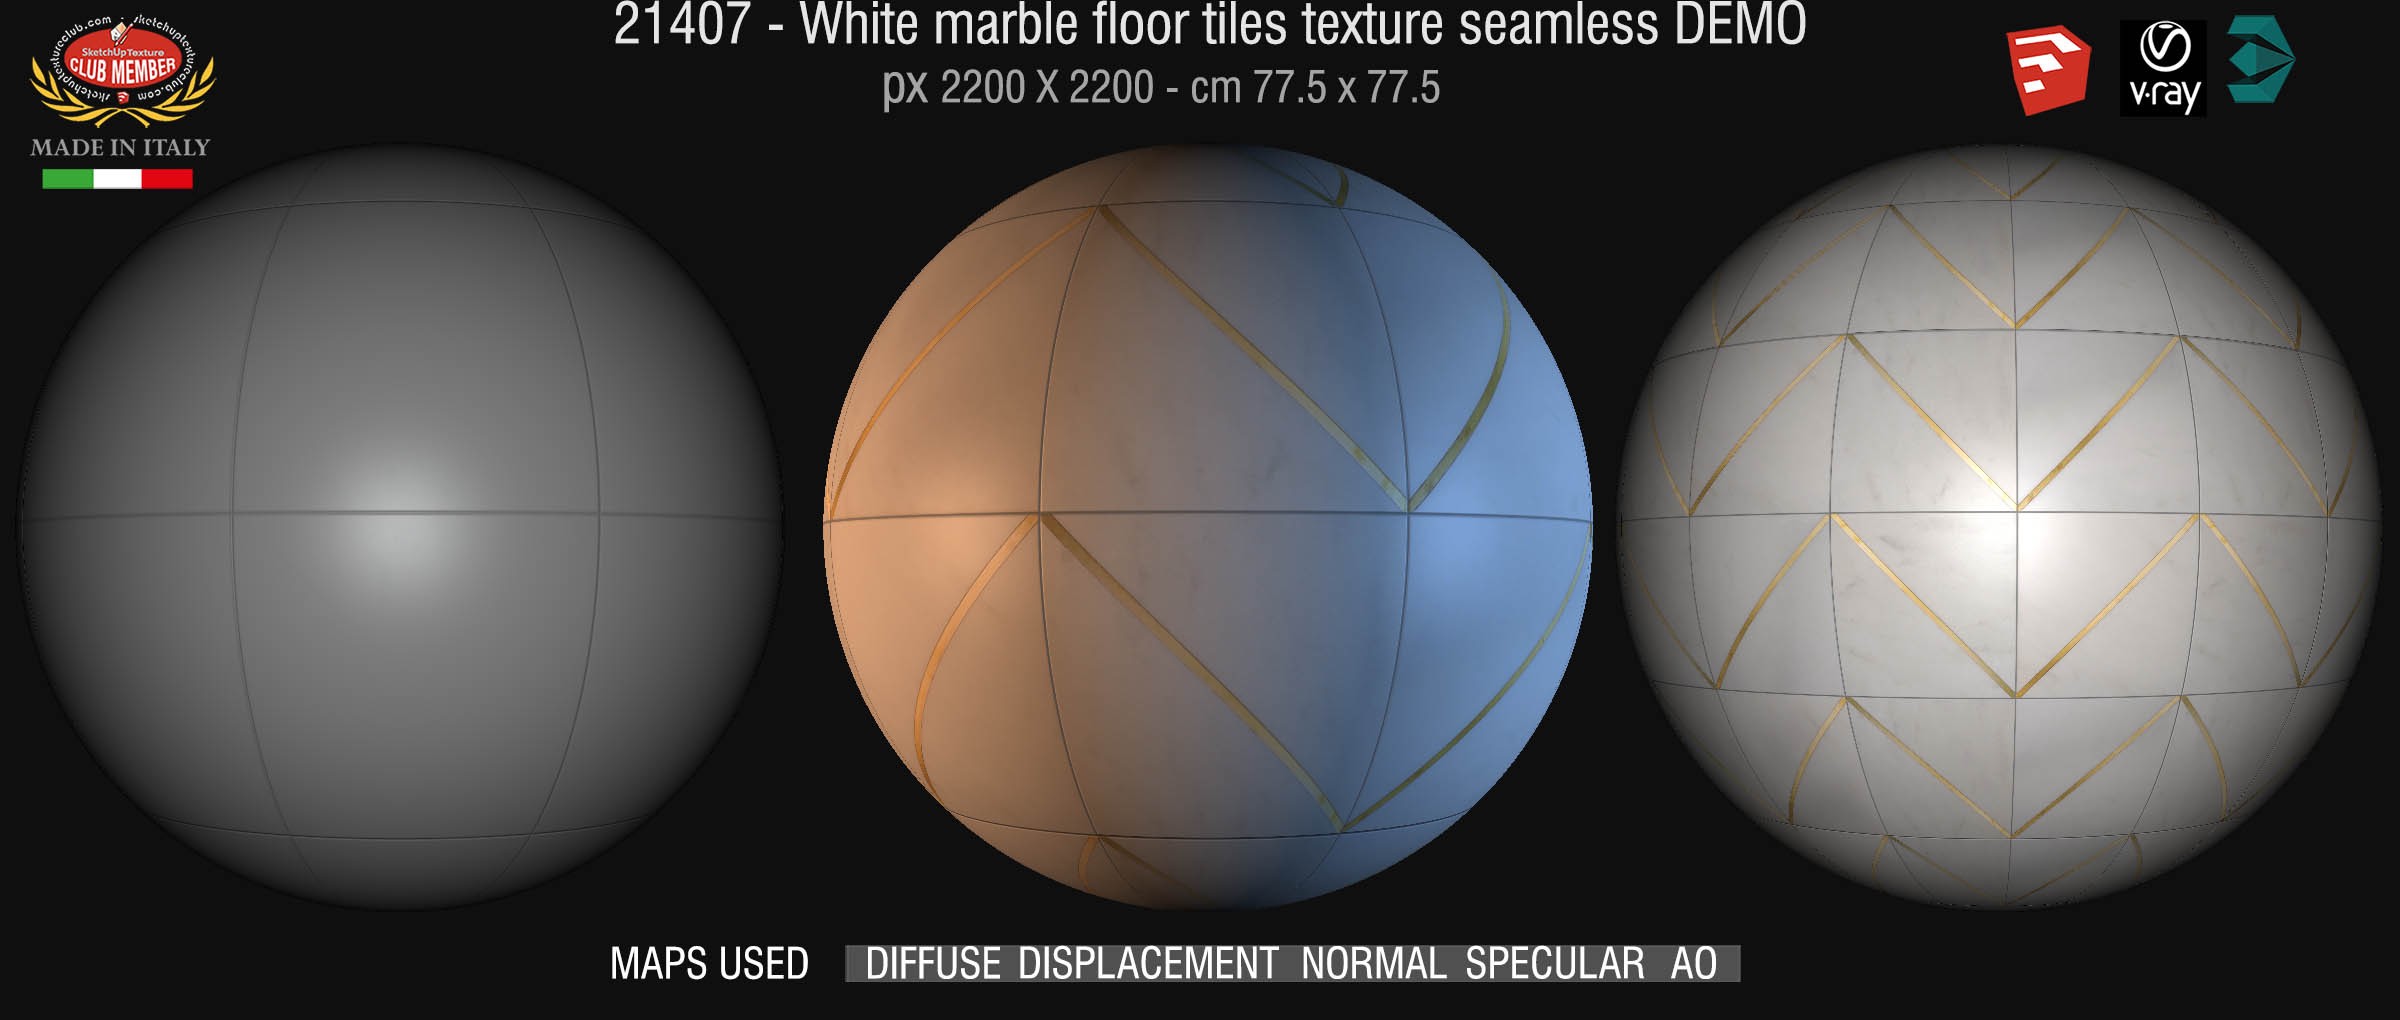 21407  white marble floor tiles texture seamless + maps DEMO